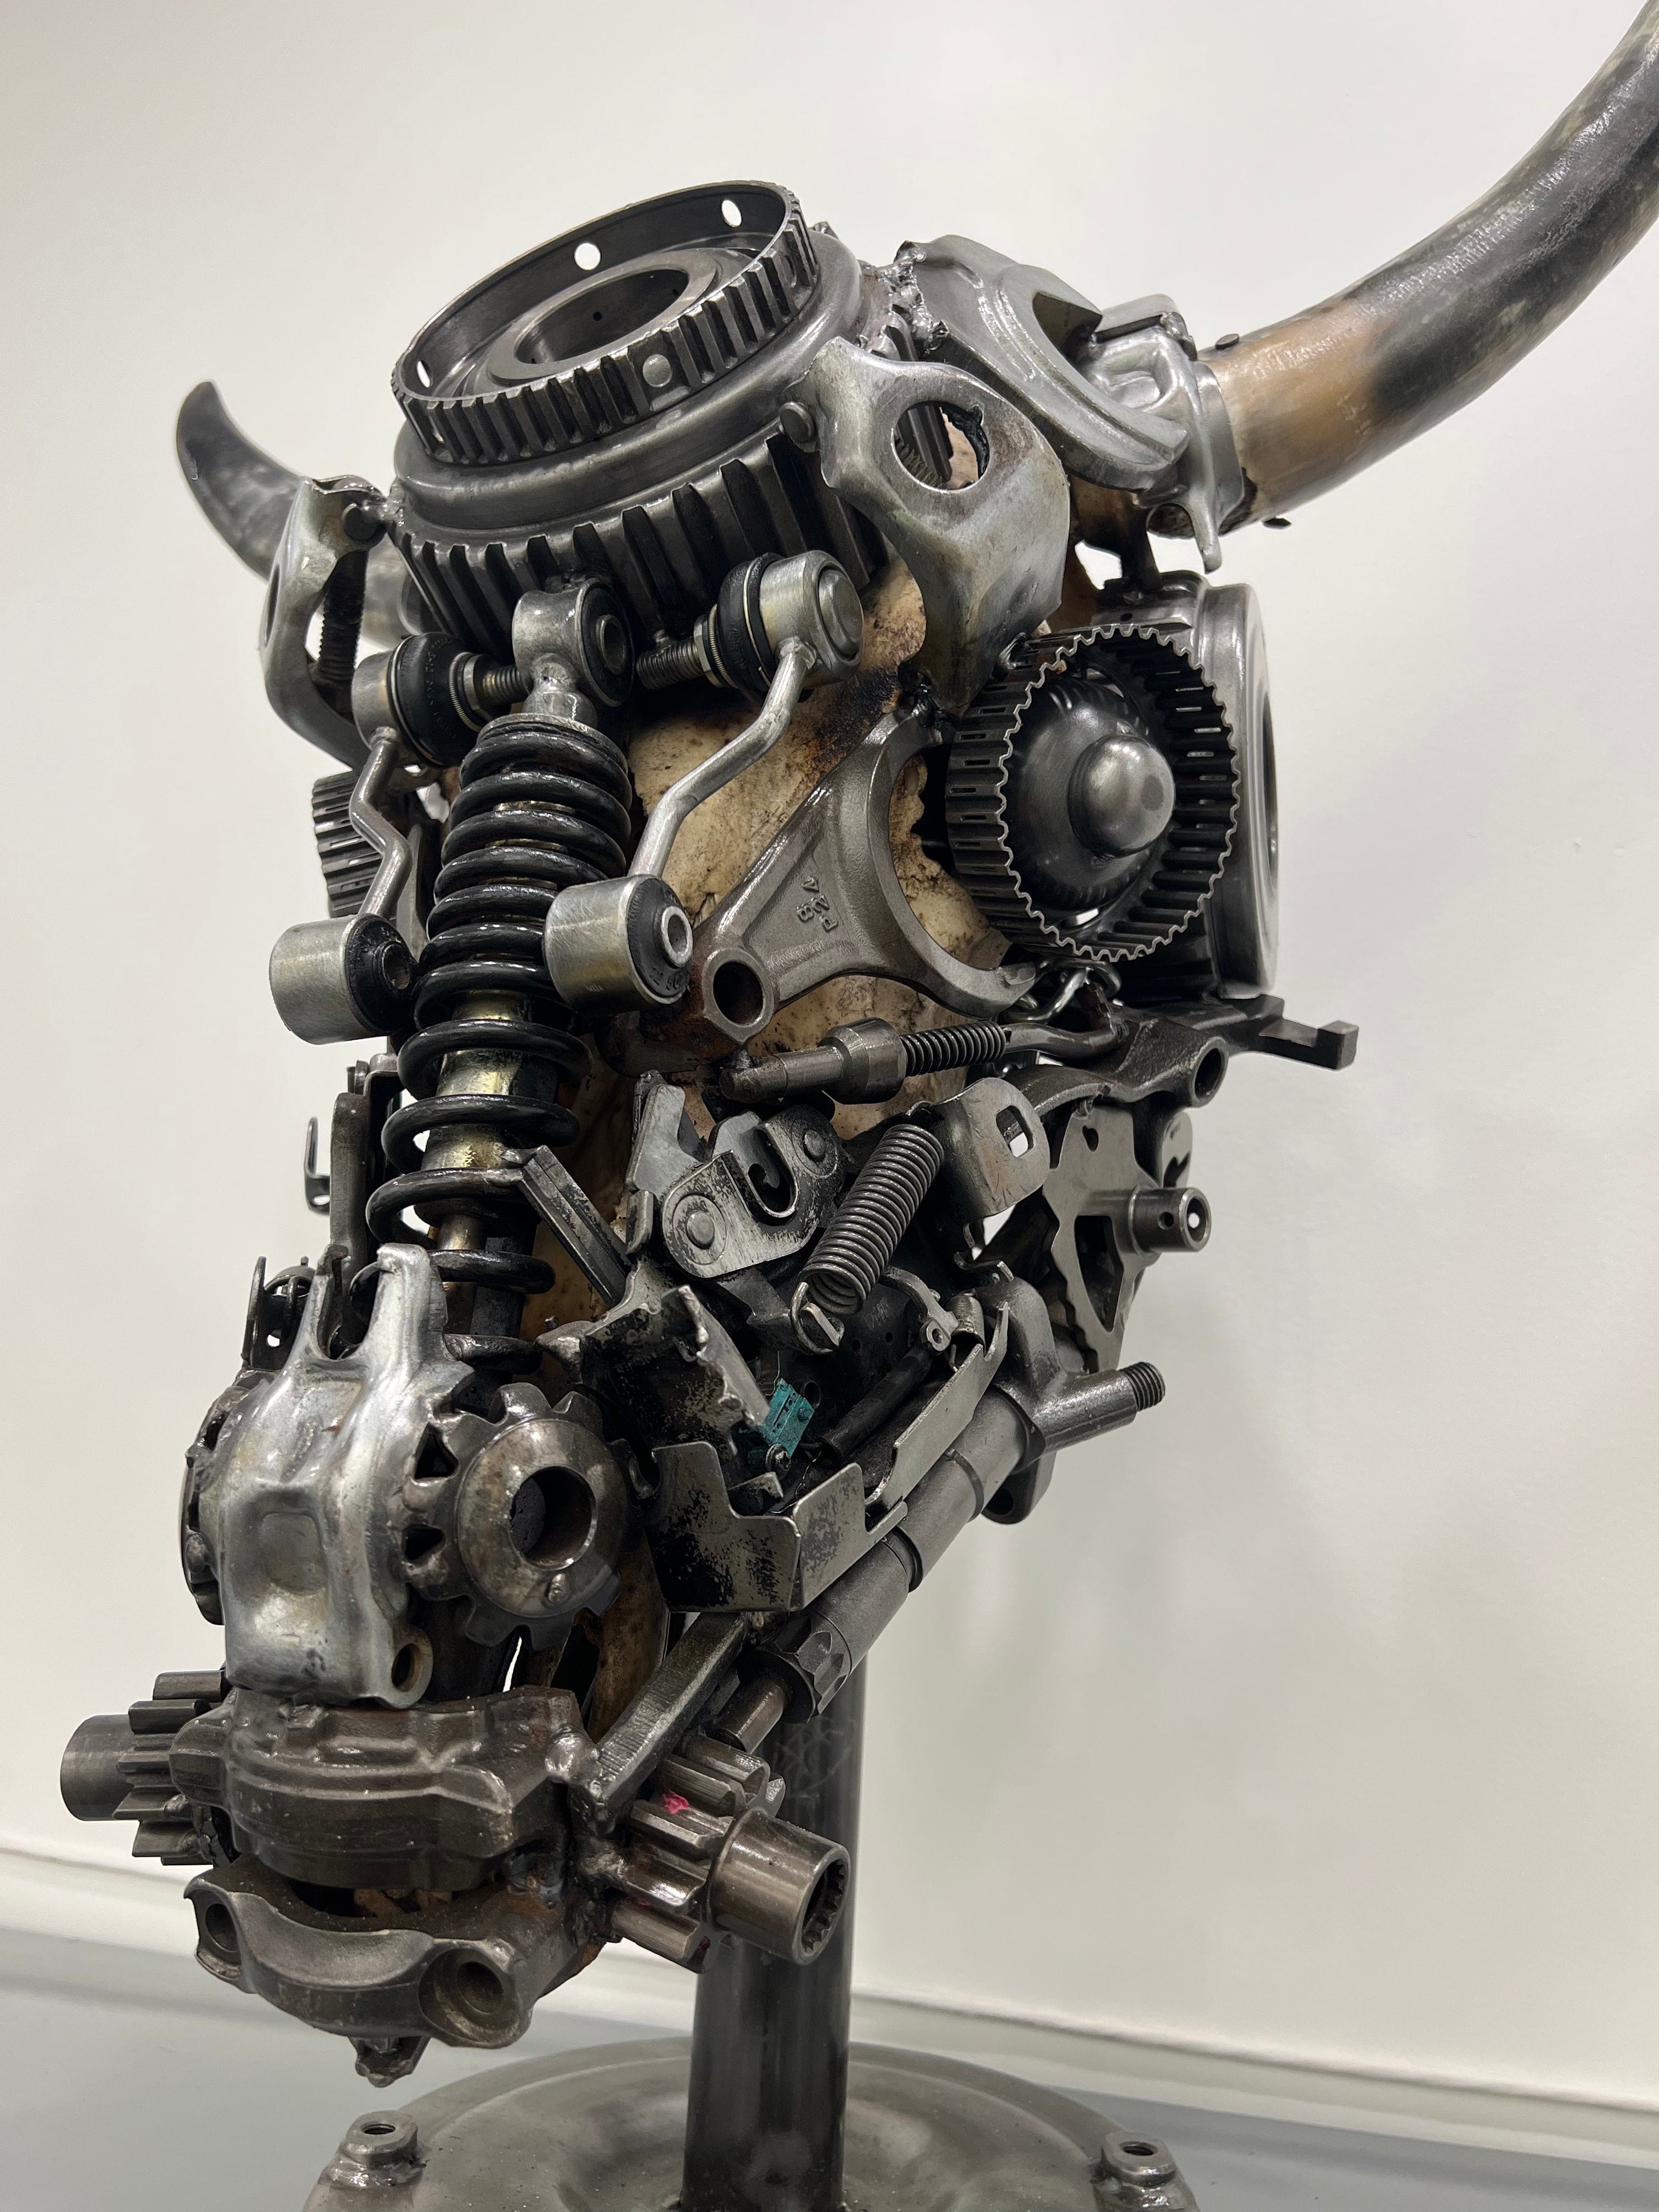 Kalifano Recycled Metal Art Bull Skull Recycled Metal Art Sculpture RMS-BSK-S61